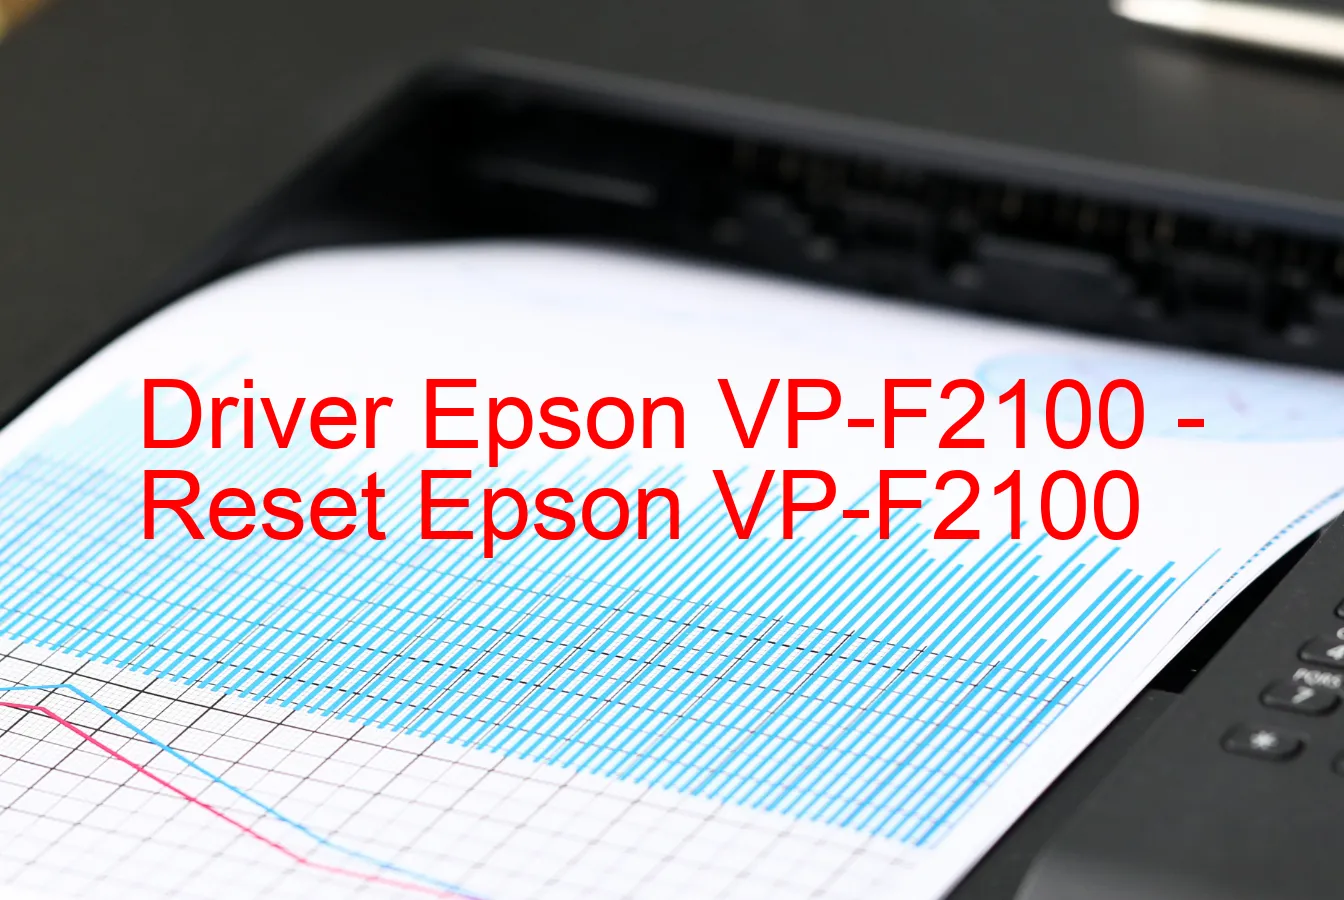 Epson VP-F2100のドライバー、Epson VP-F2100のリセットソフトウェア